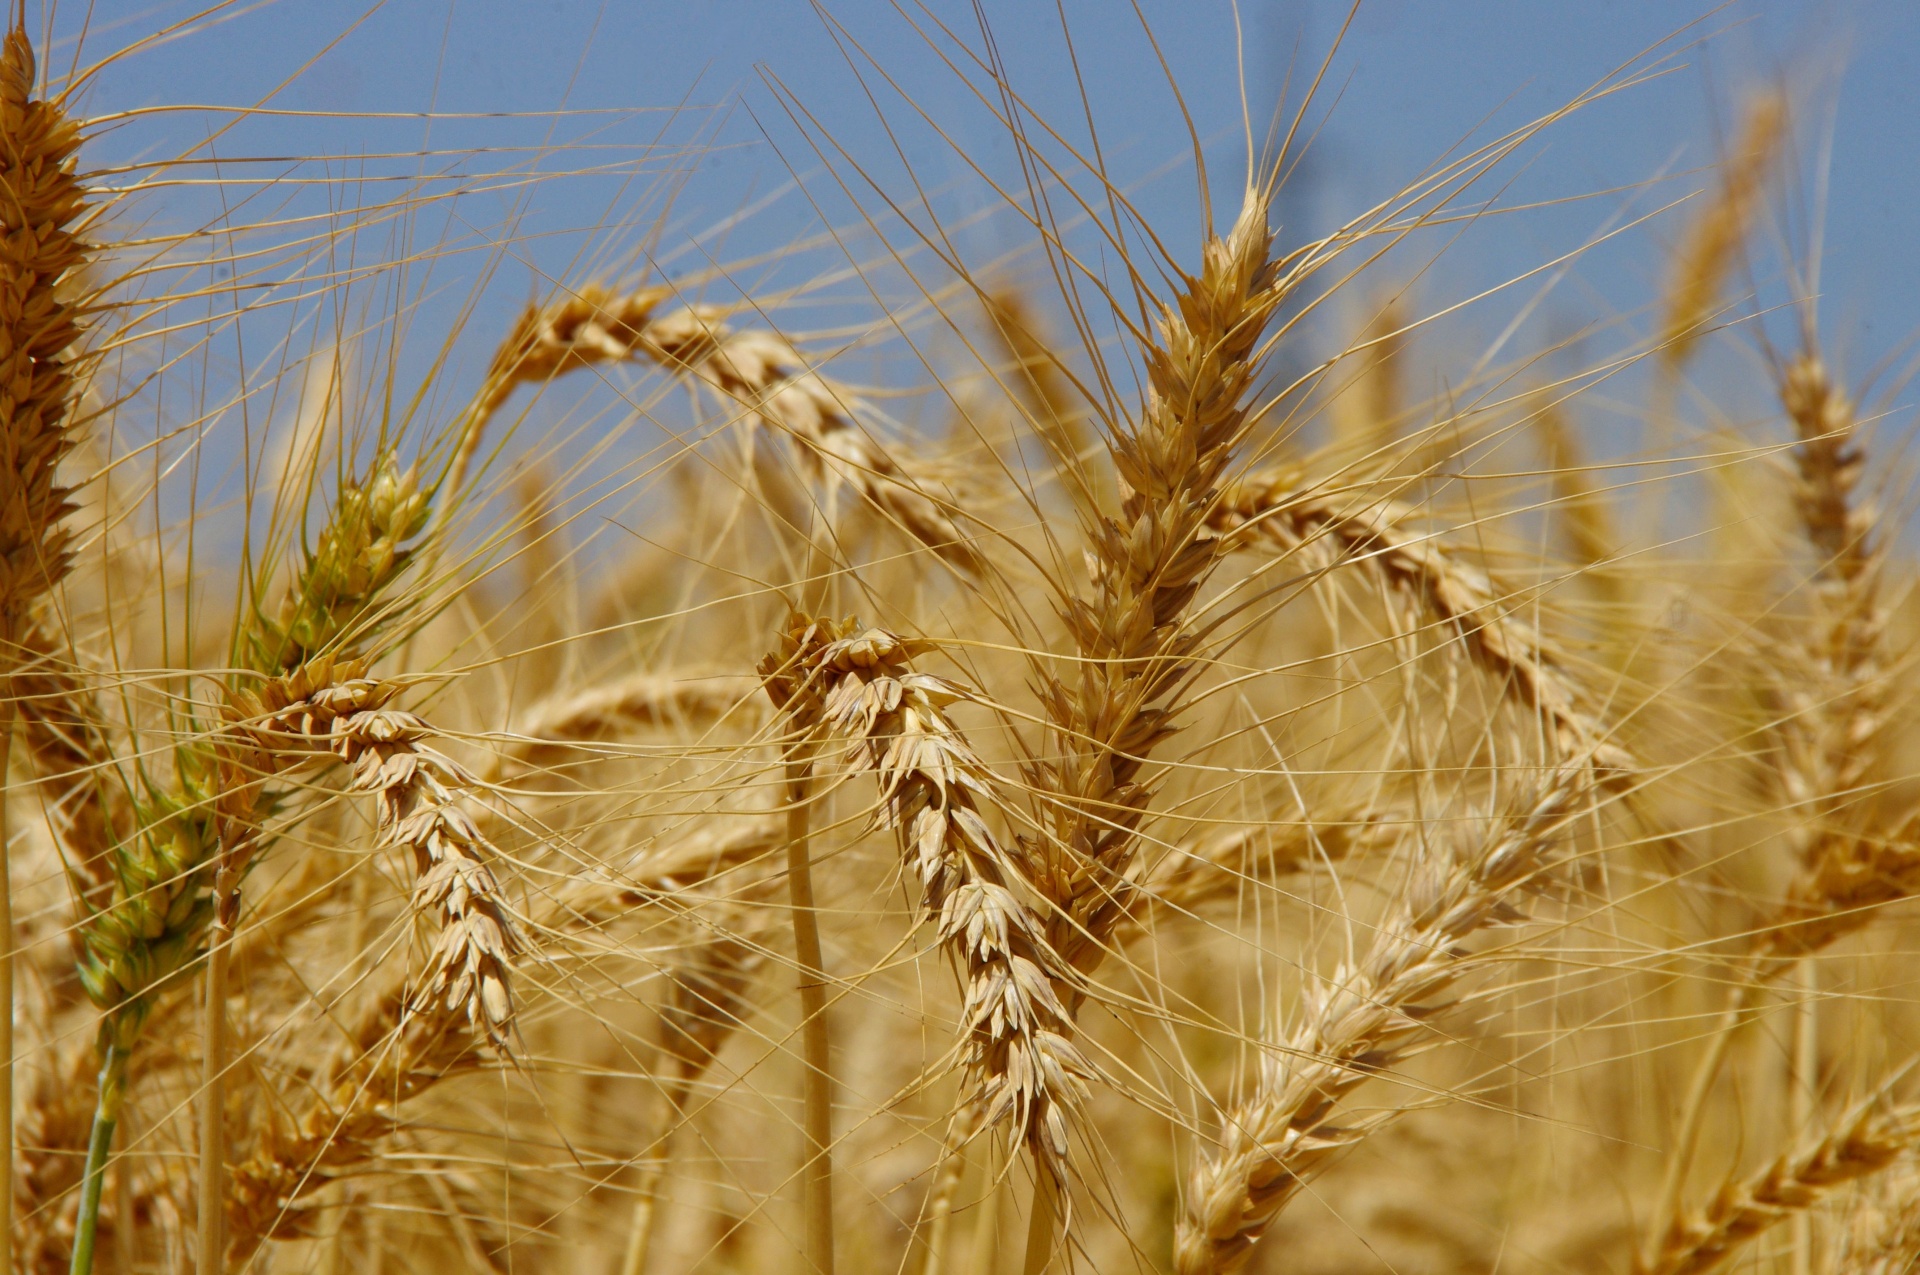 Happy Shavuot with ripe wheat in fields